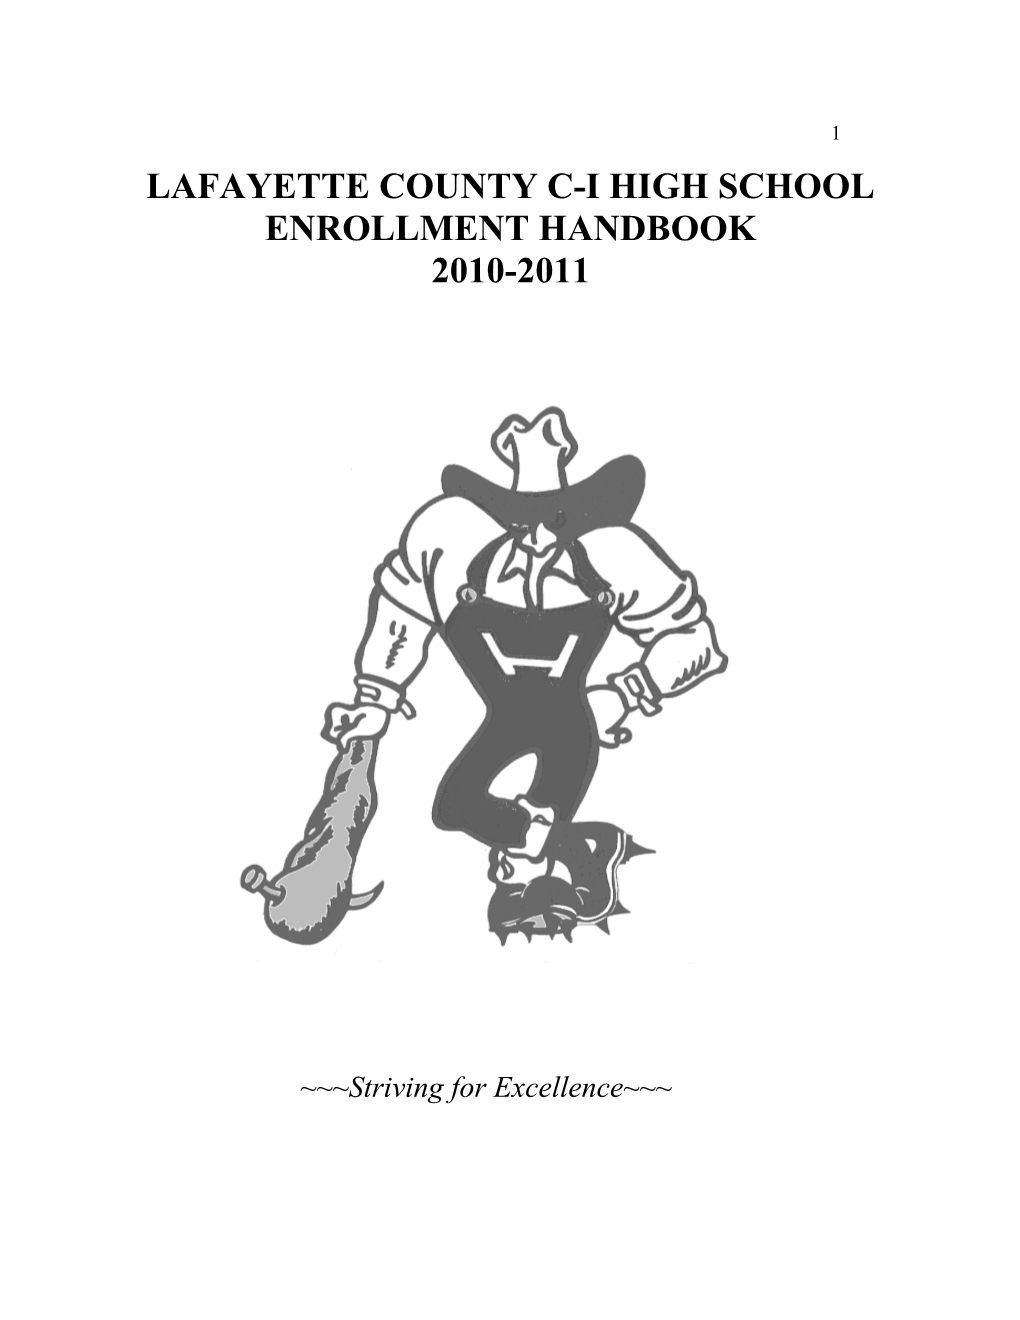 Lafayette County C-I High School